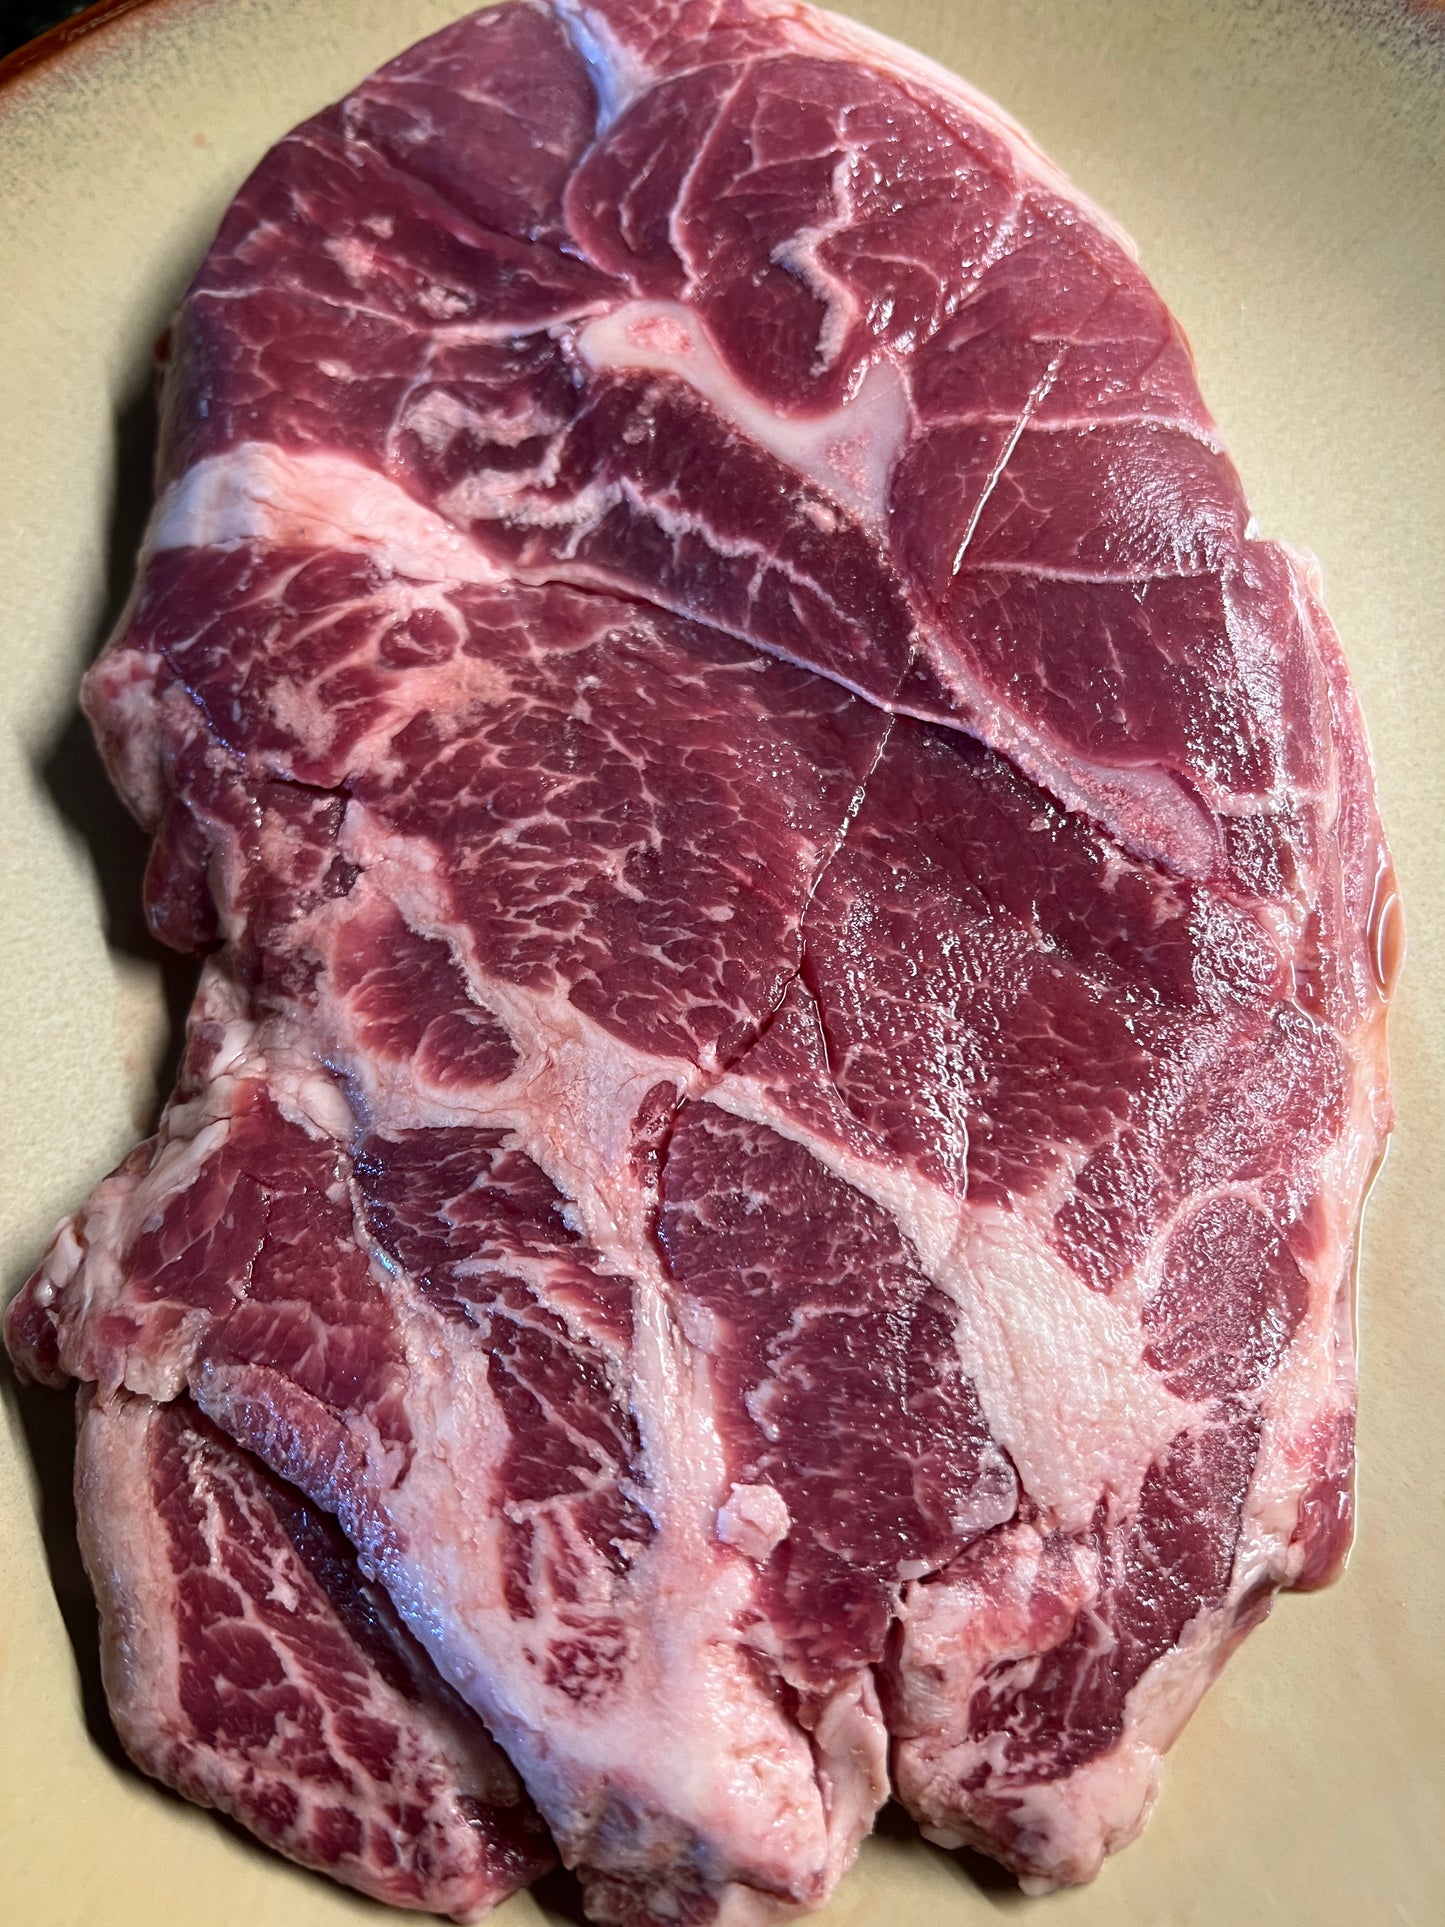 Mangalista Gourmet Pastured Shoulder Steaks